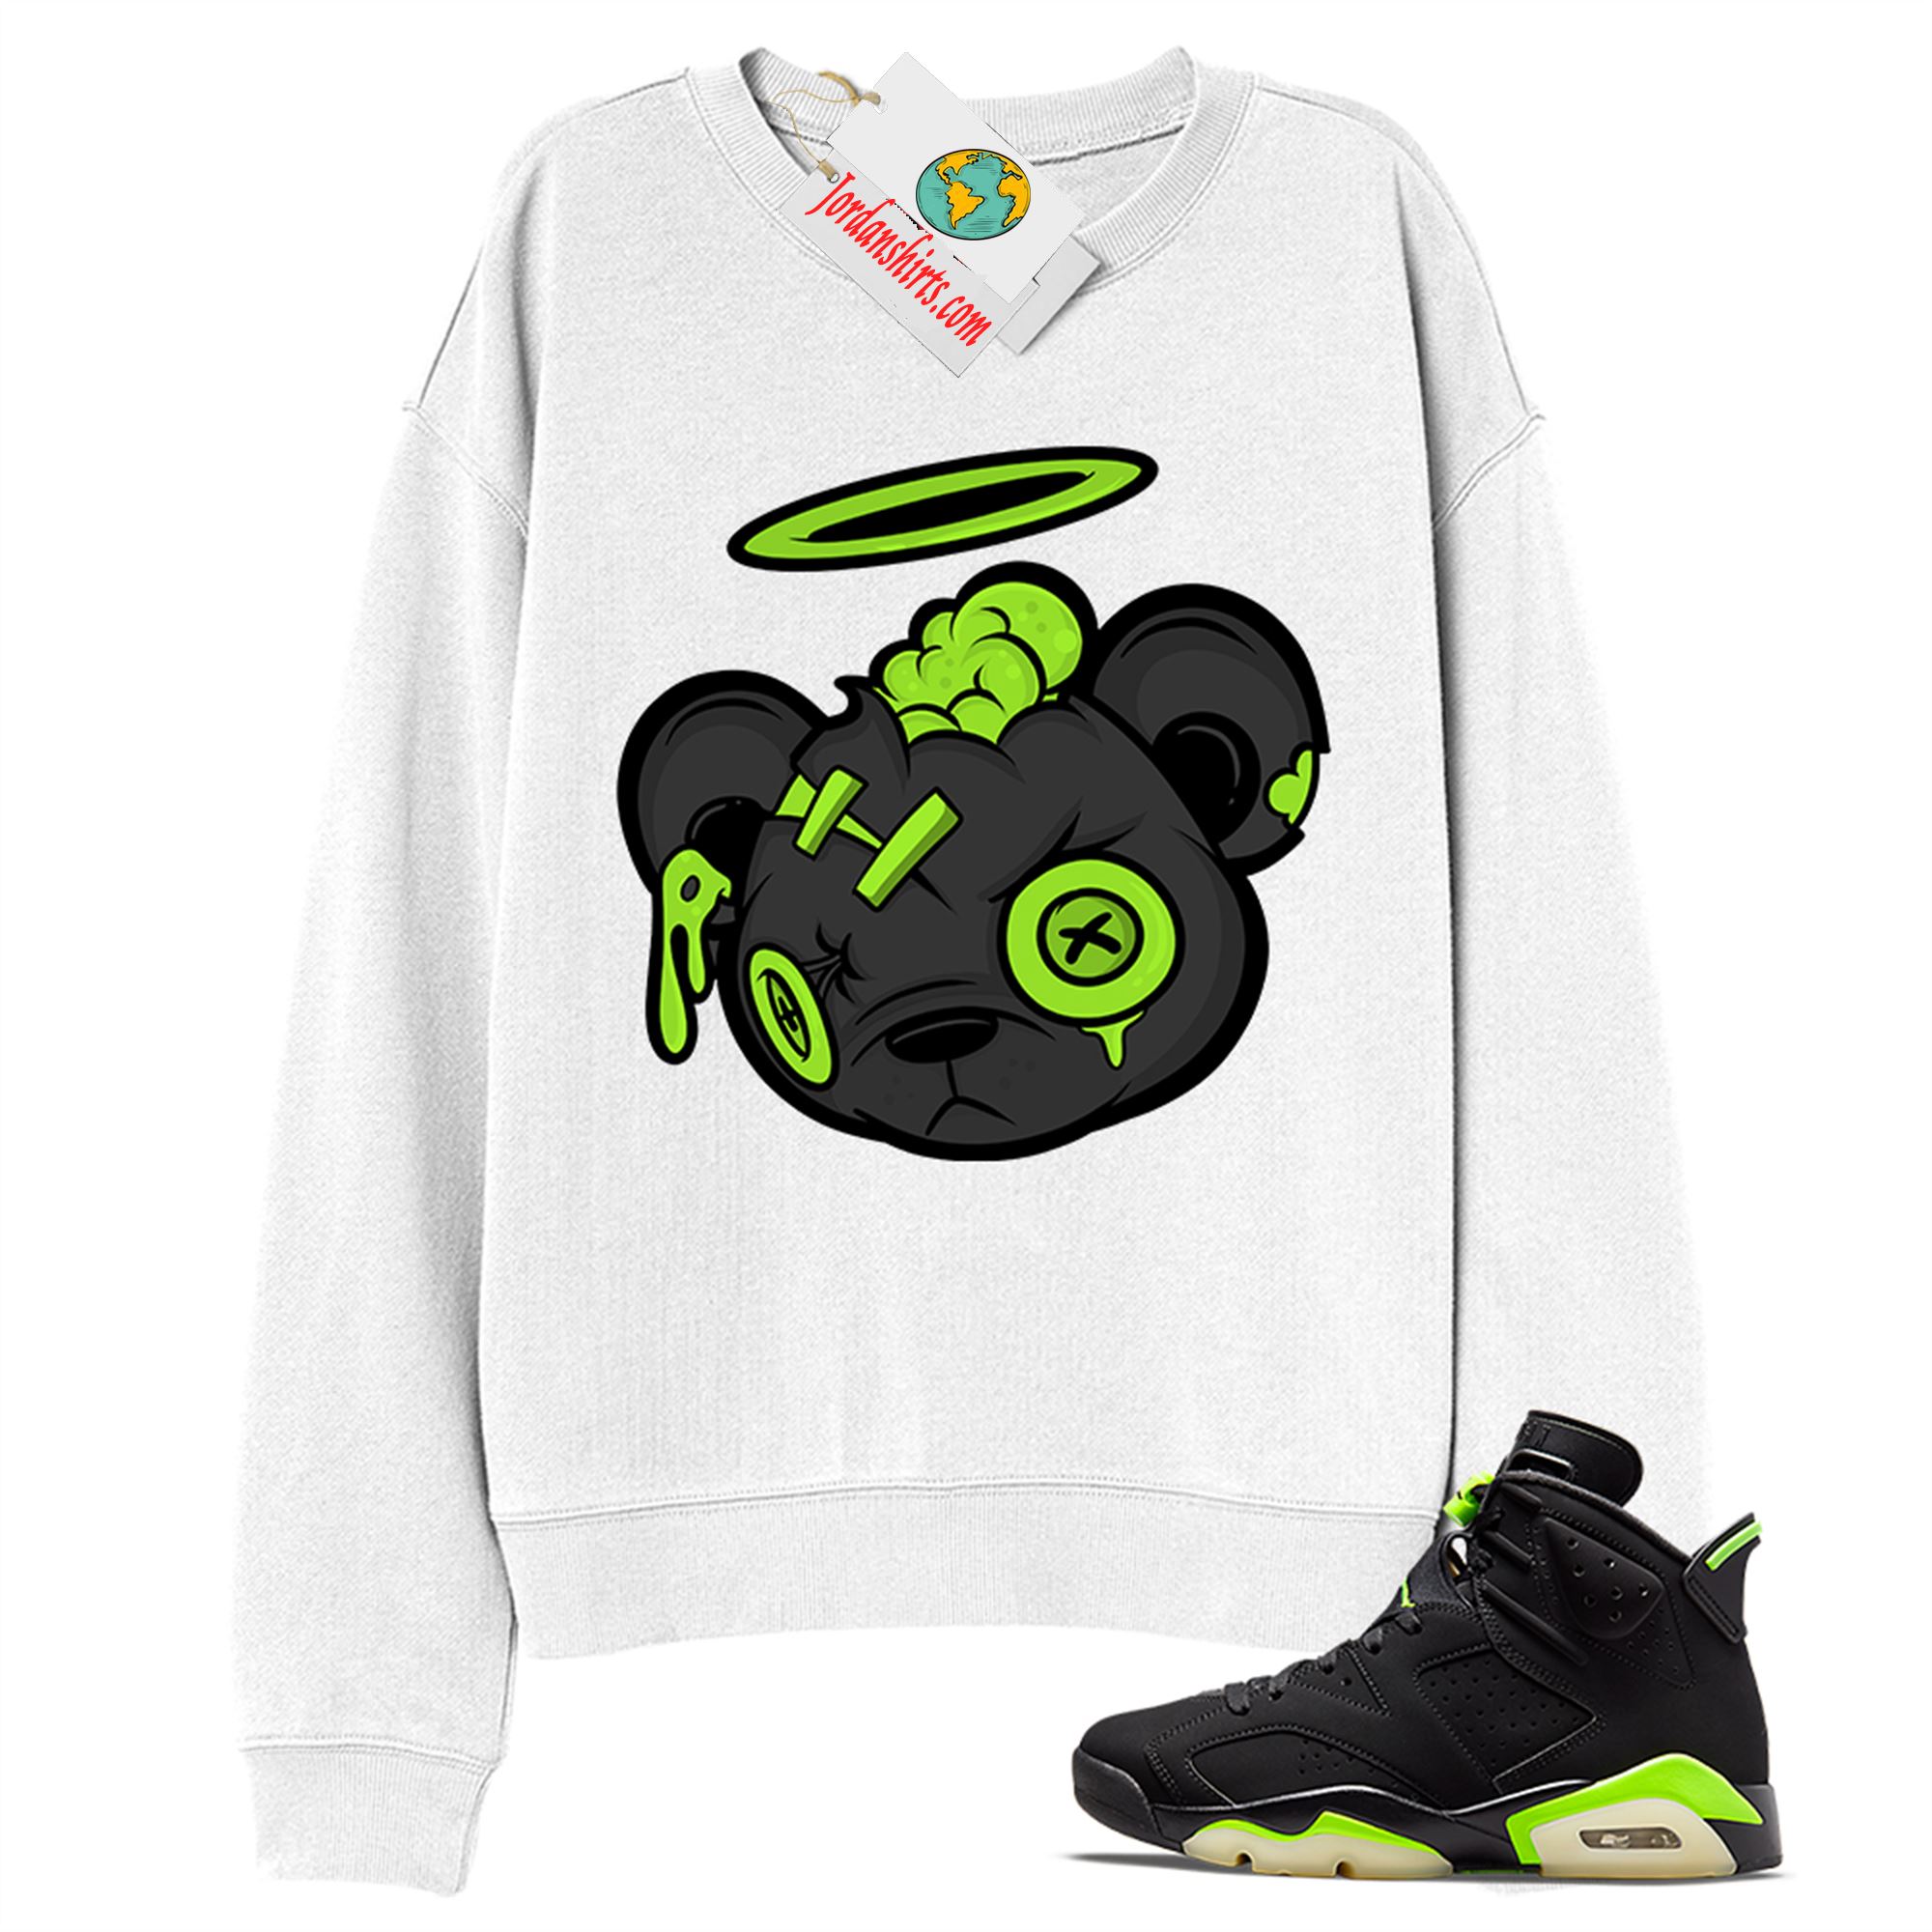 Jordan 6 Sweatshirt, Halo Teddy White Sweatshirt Air Jordan 6 Electric Green 6s Plus Size Up To 5xl